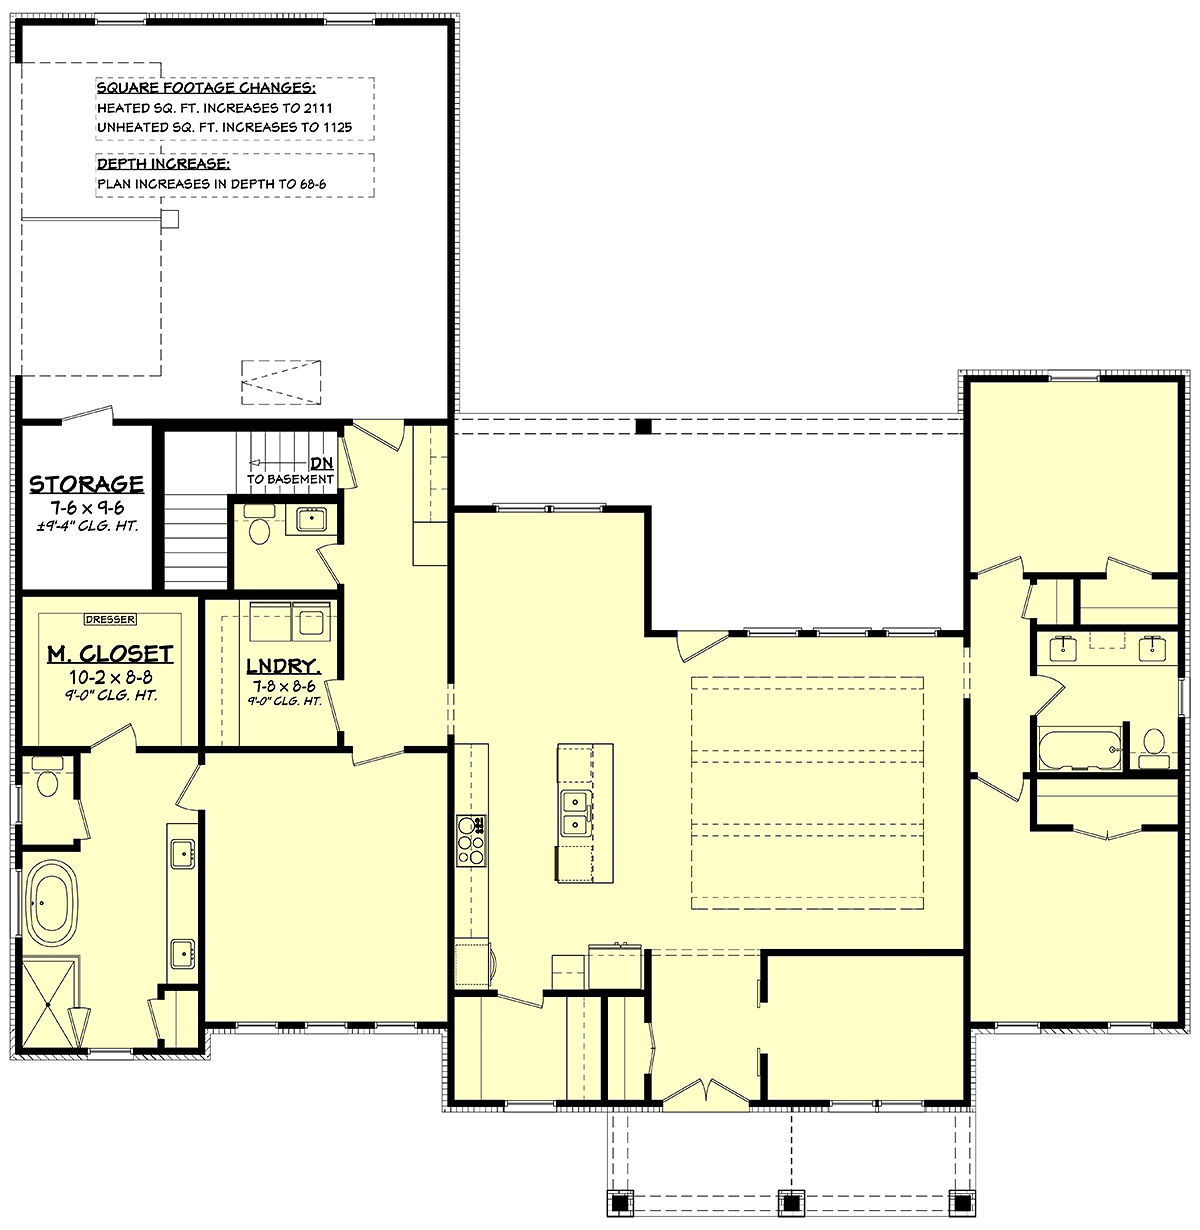 House Plan 82918 Alternate Level One